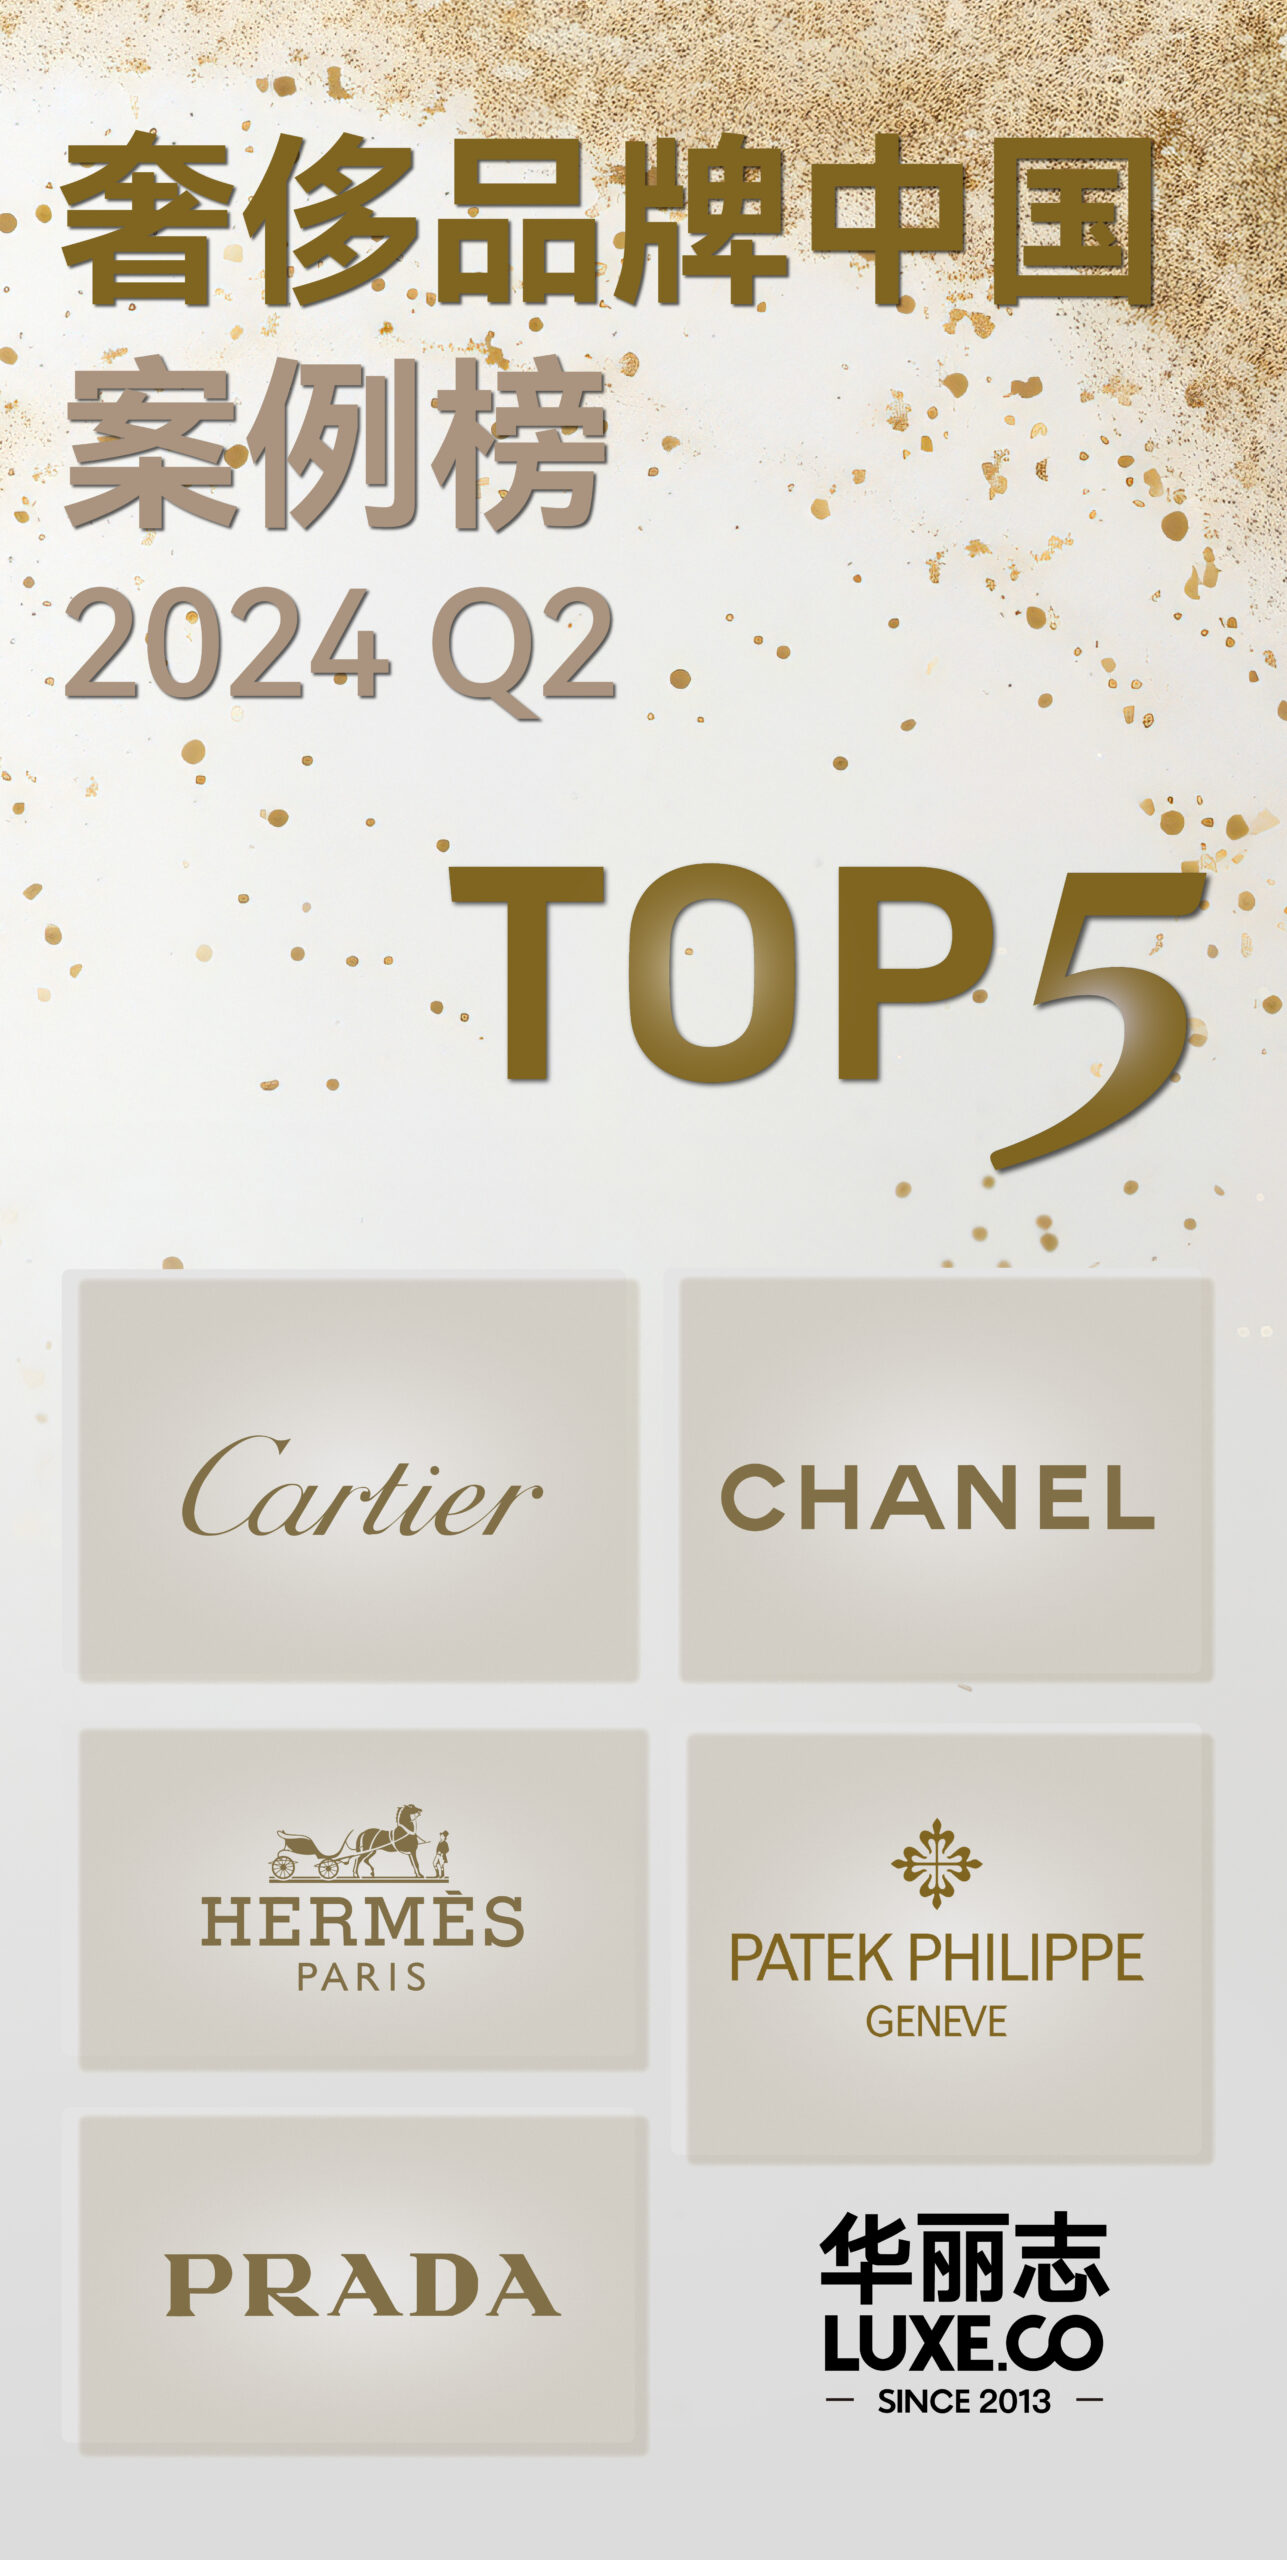 Top 5 Luxury Brands for Q2: Cartier, Chanel, Hermès, Patek Philippe, Prada